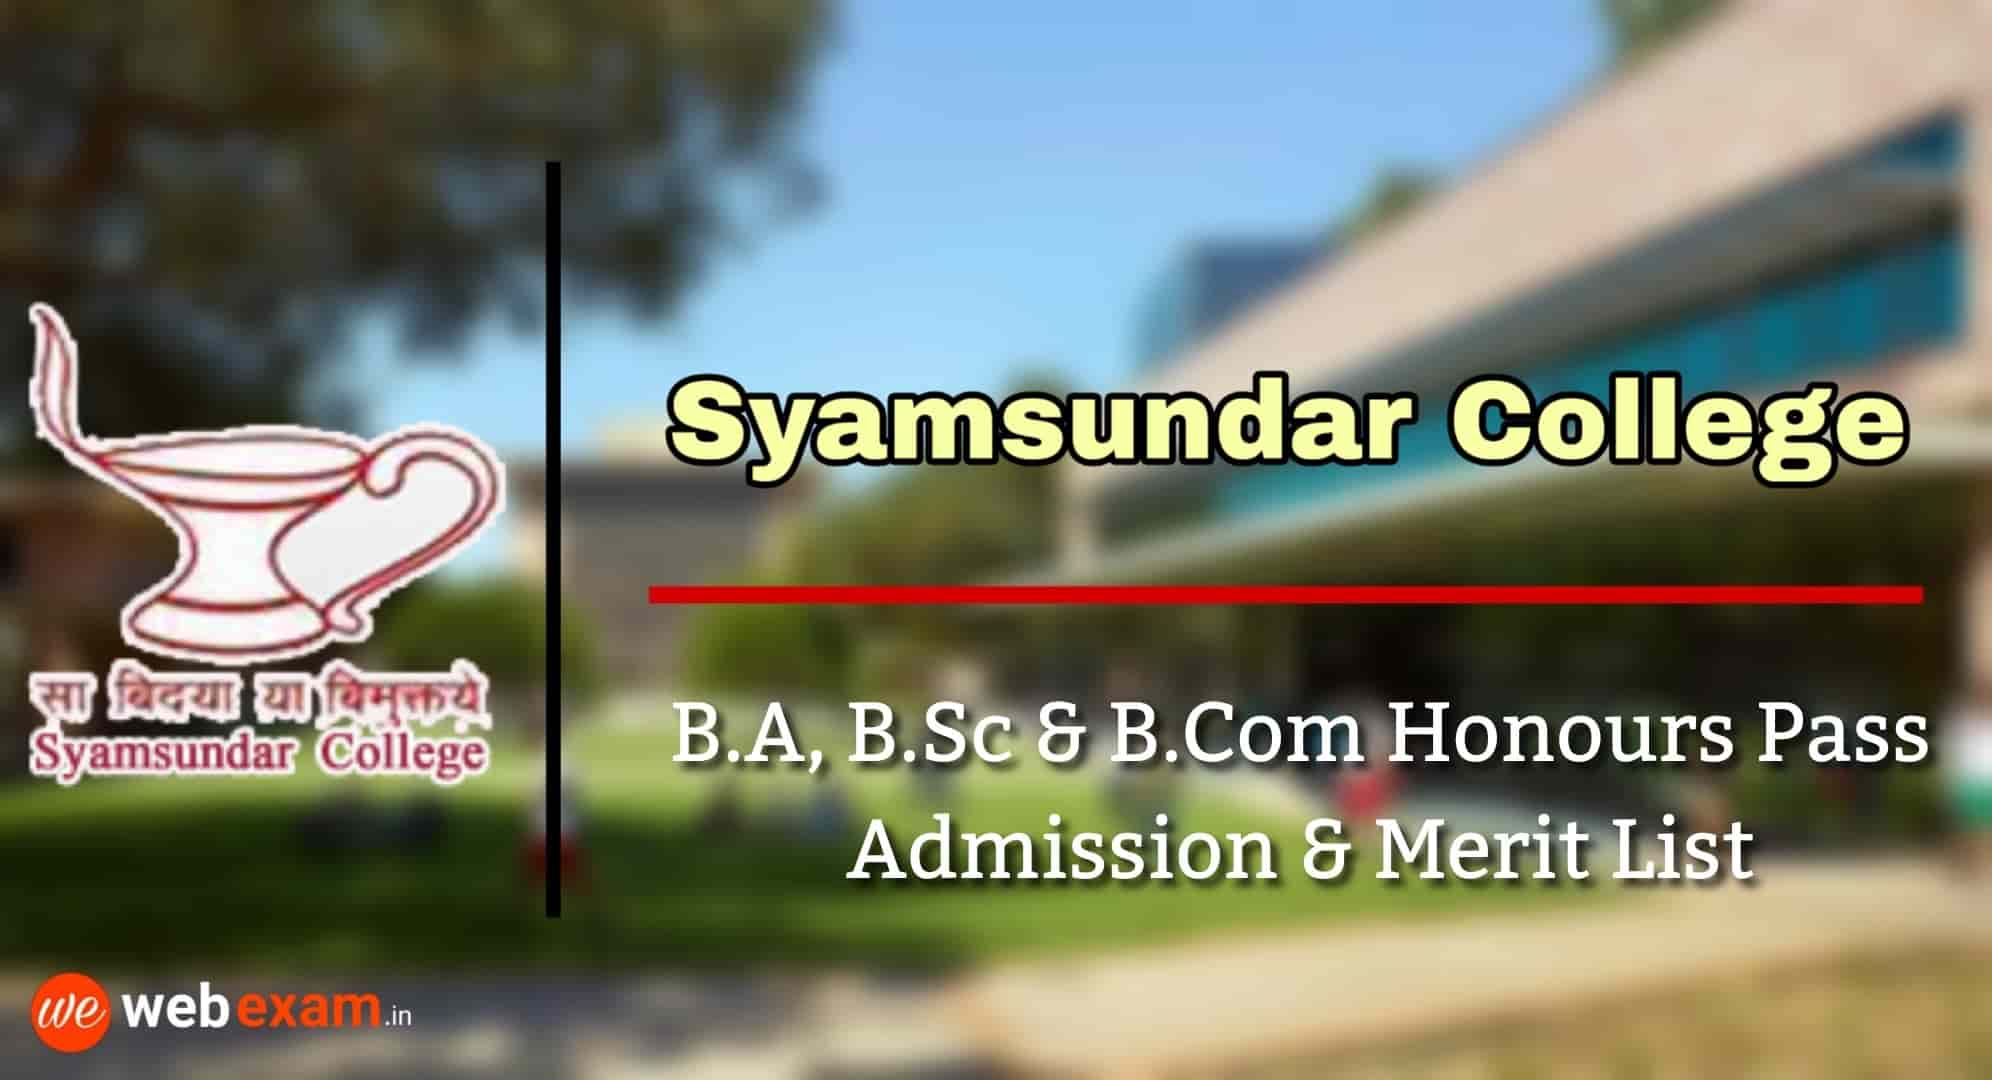 Syamsundar College Admission